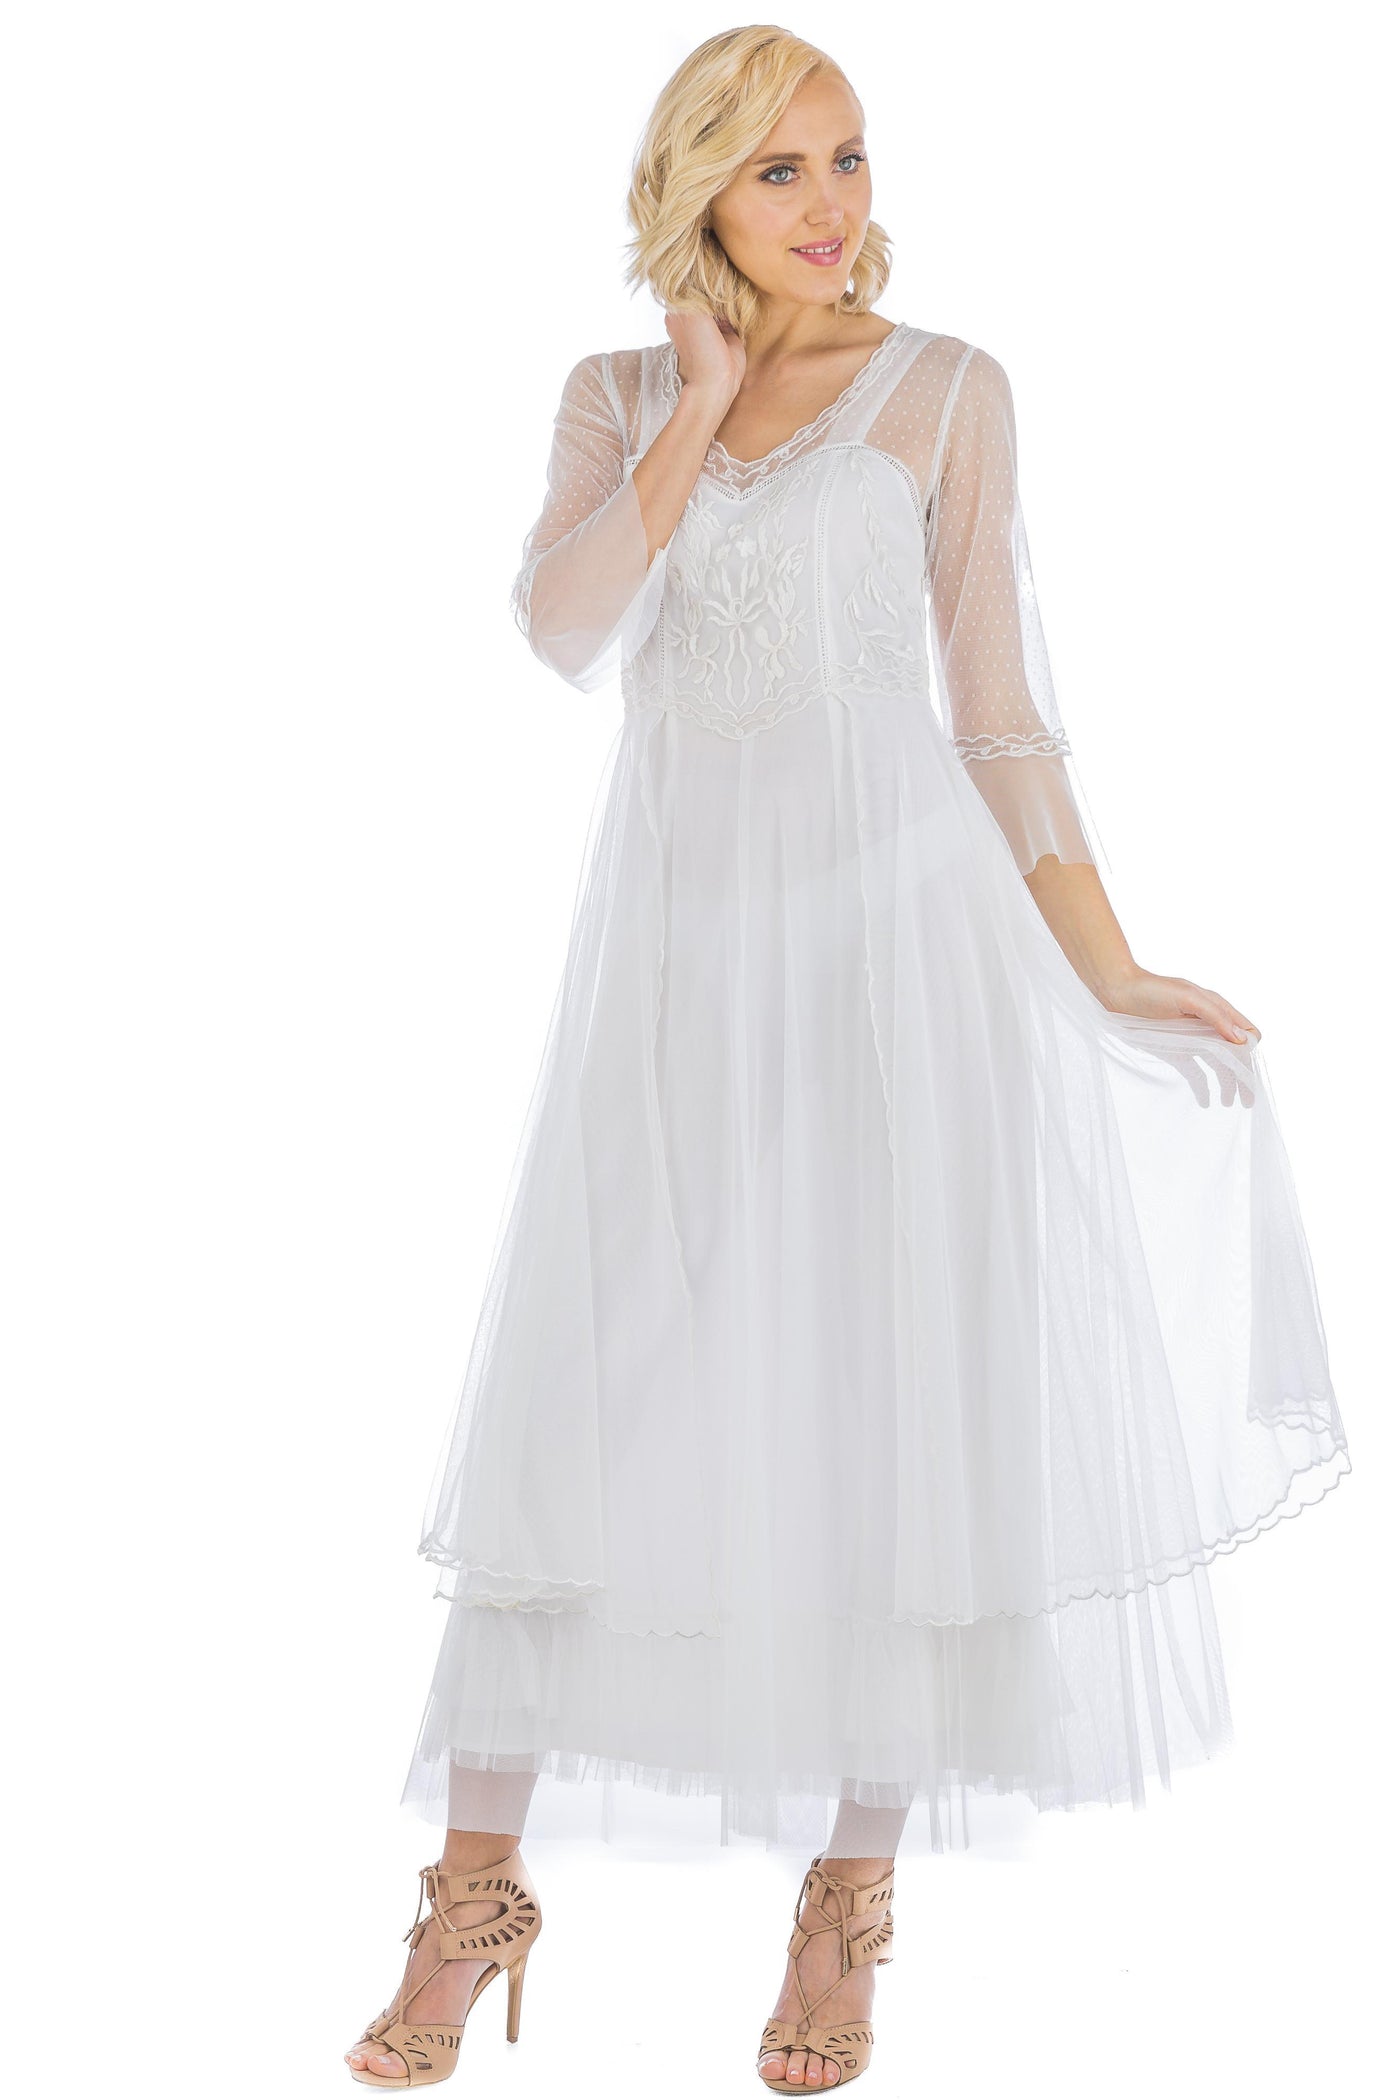 Vivian CL-075 Vintage Style Wedding Gown in Ivory by Nataya – WardrobeShop